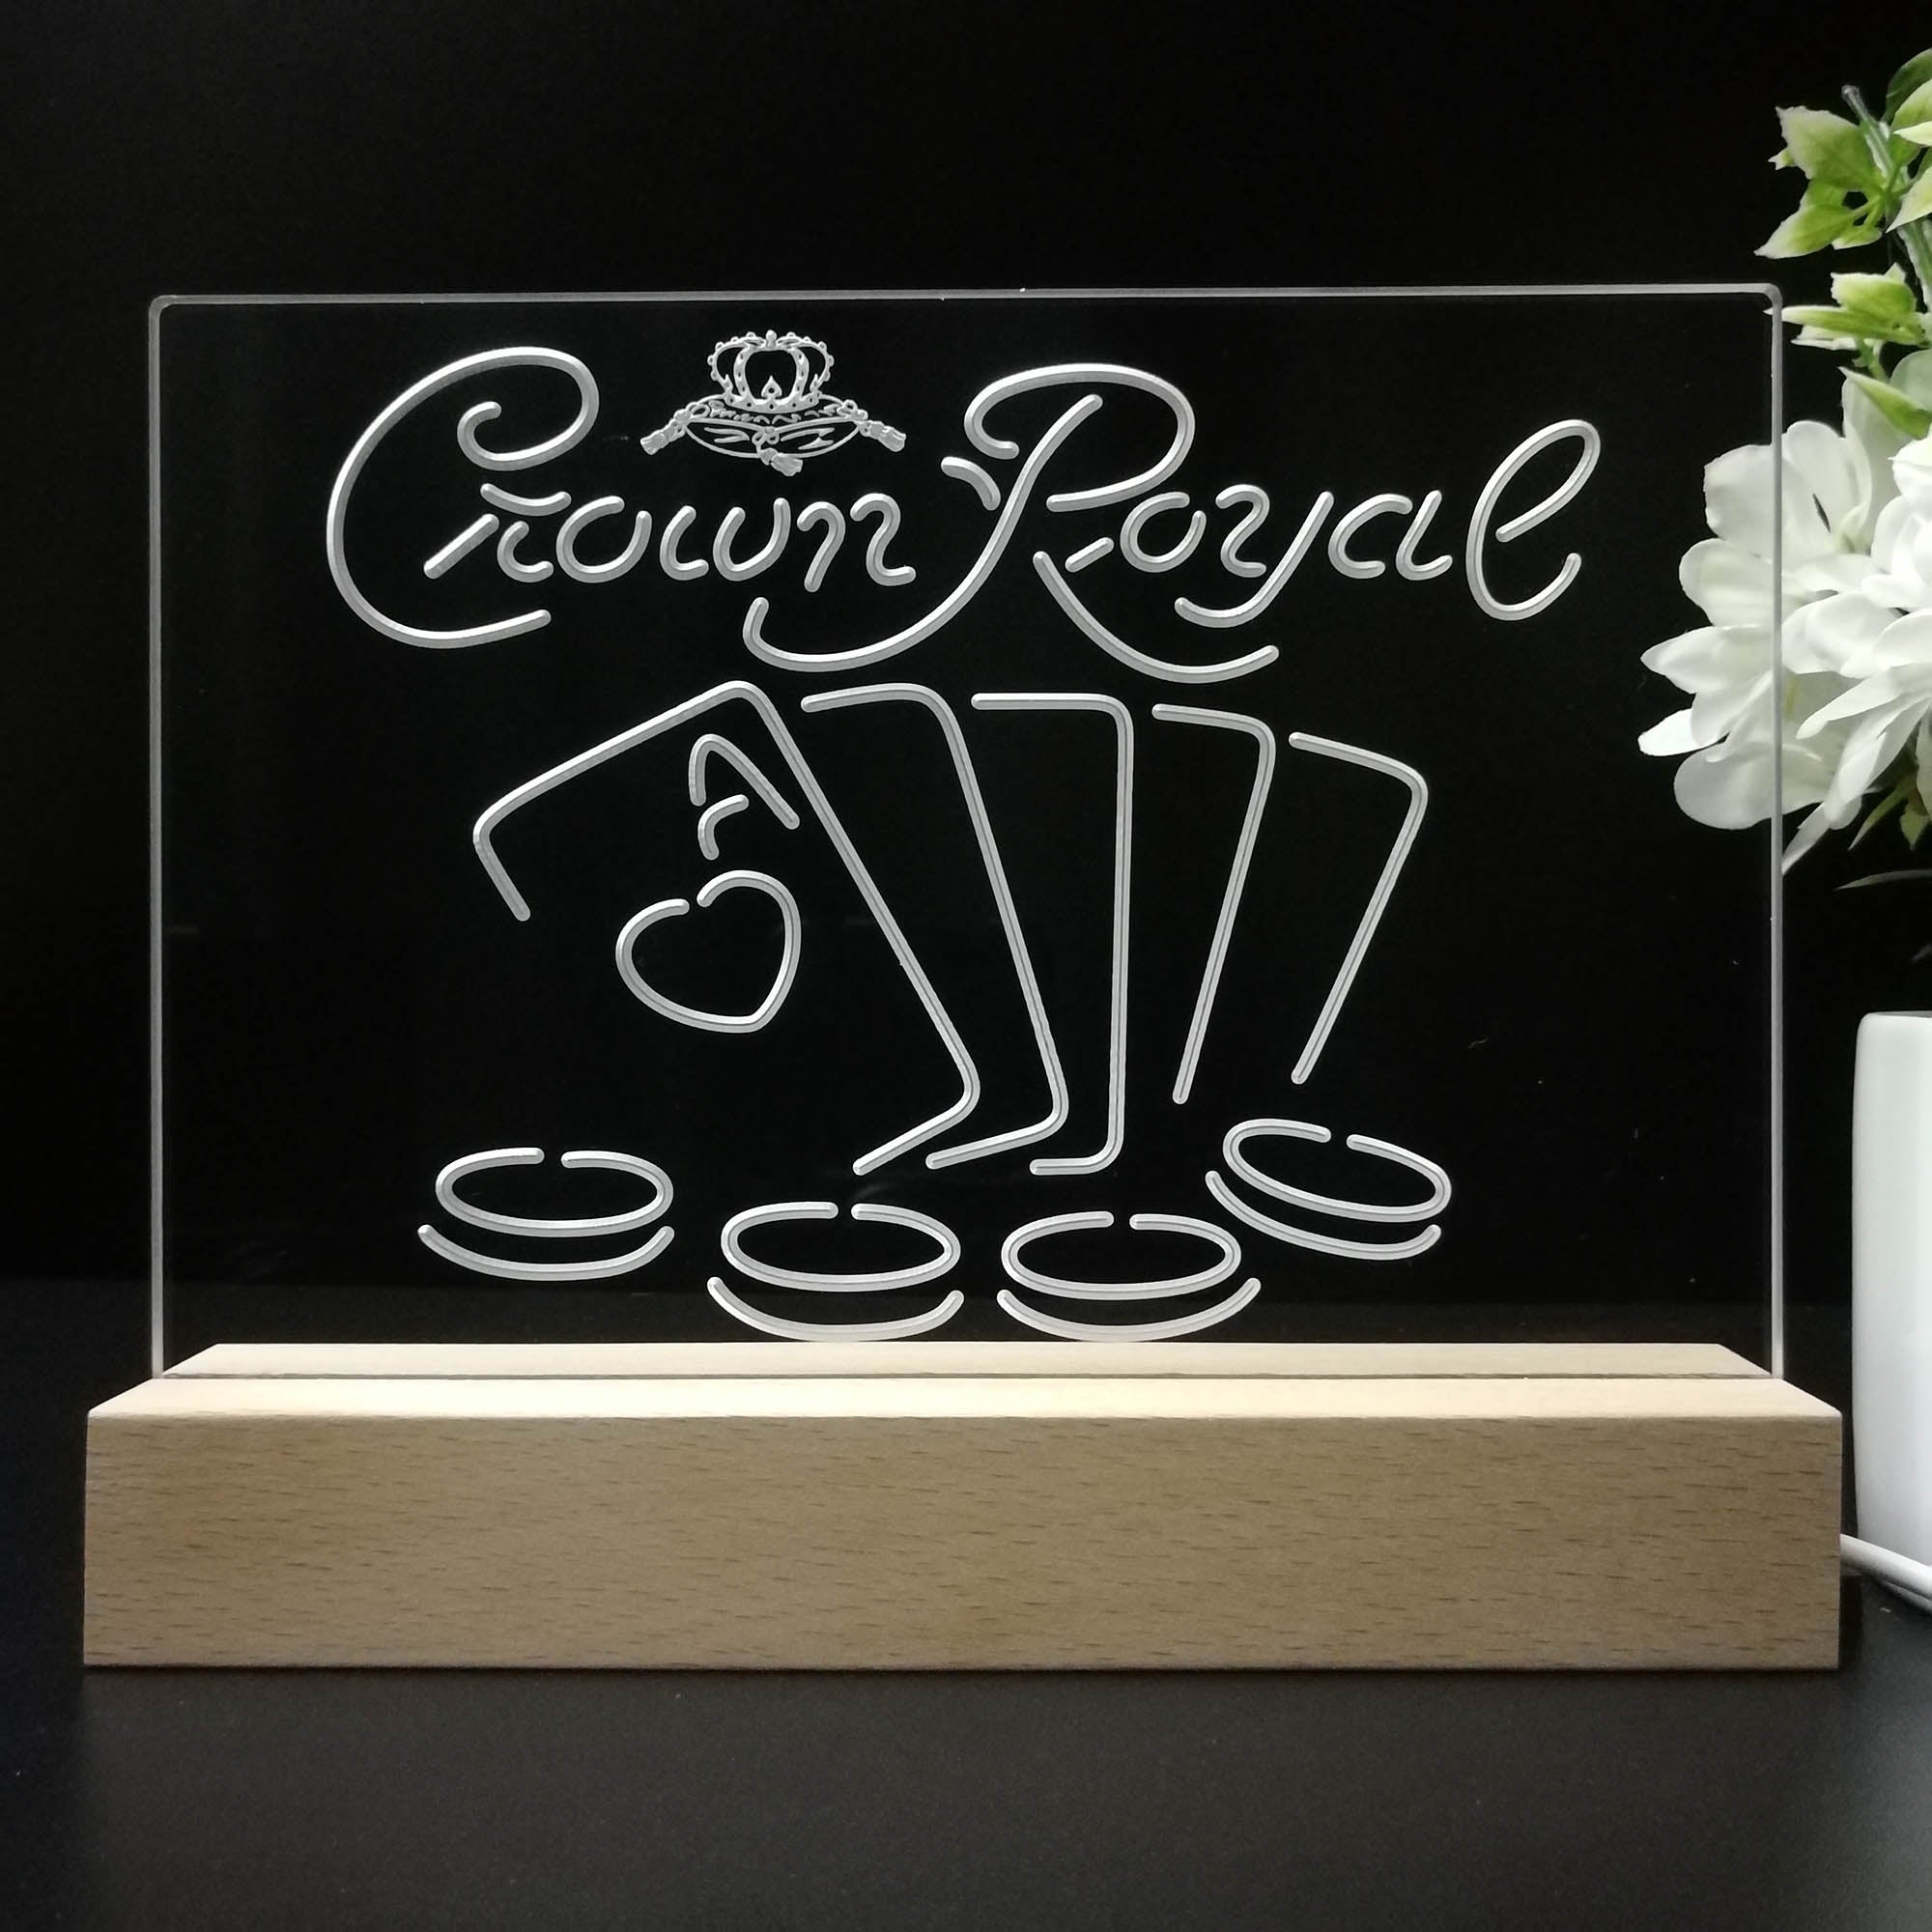 Crown Royal Casino Poker Neon Sign Pub Bar Lamp